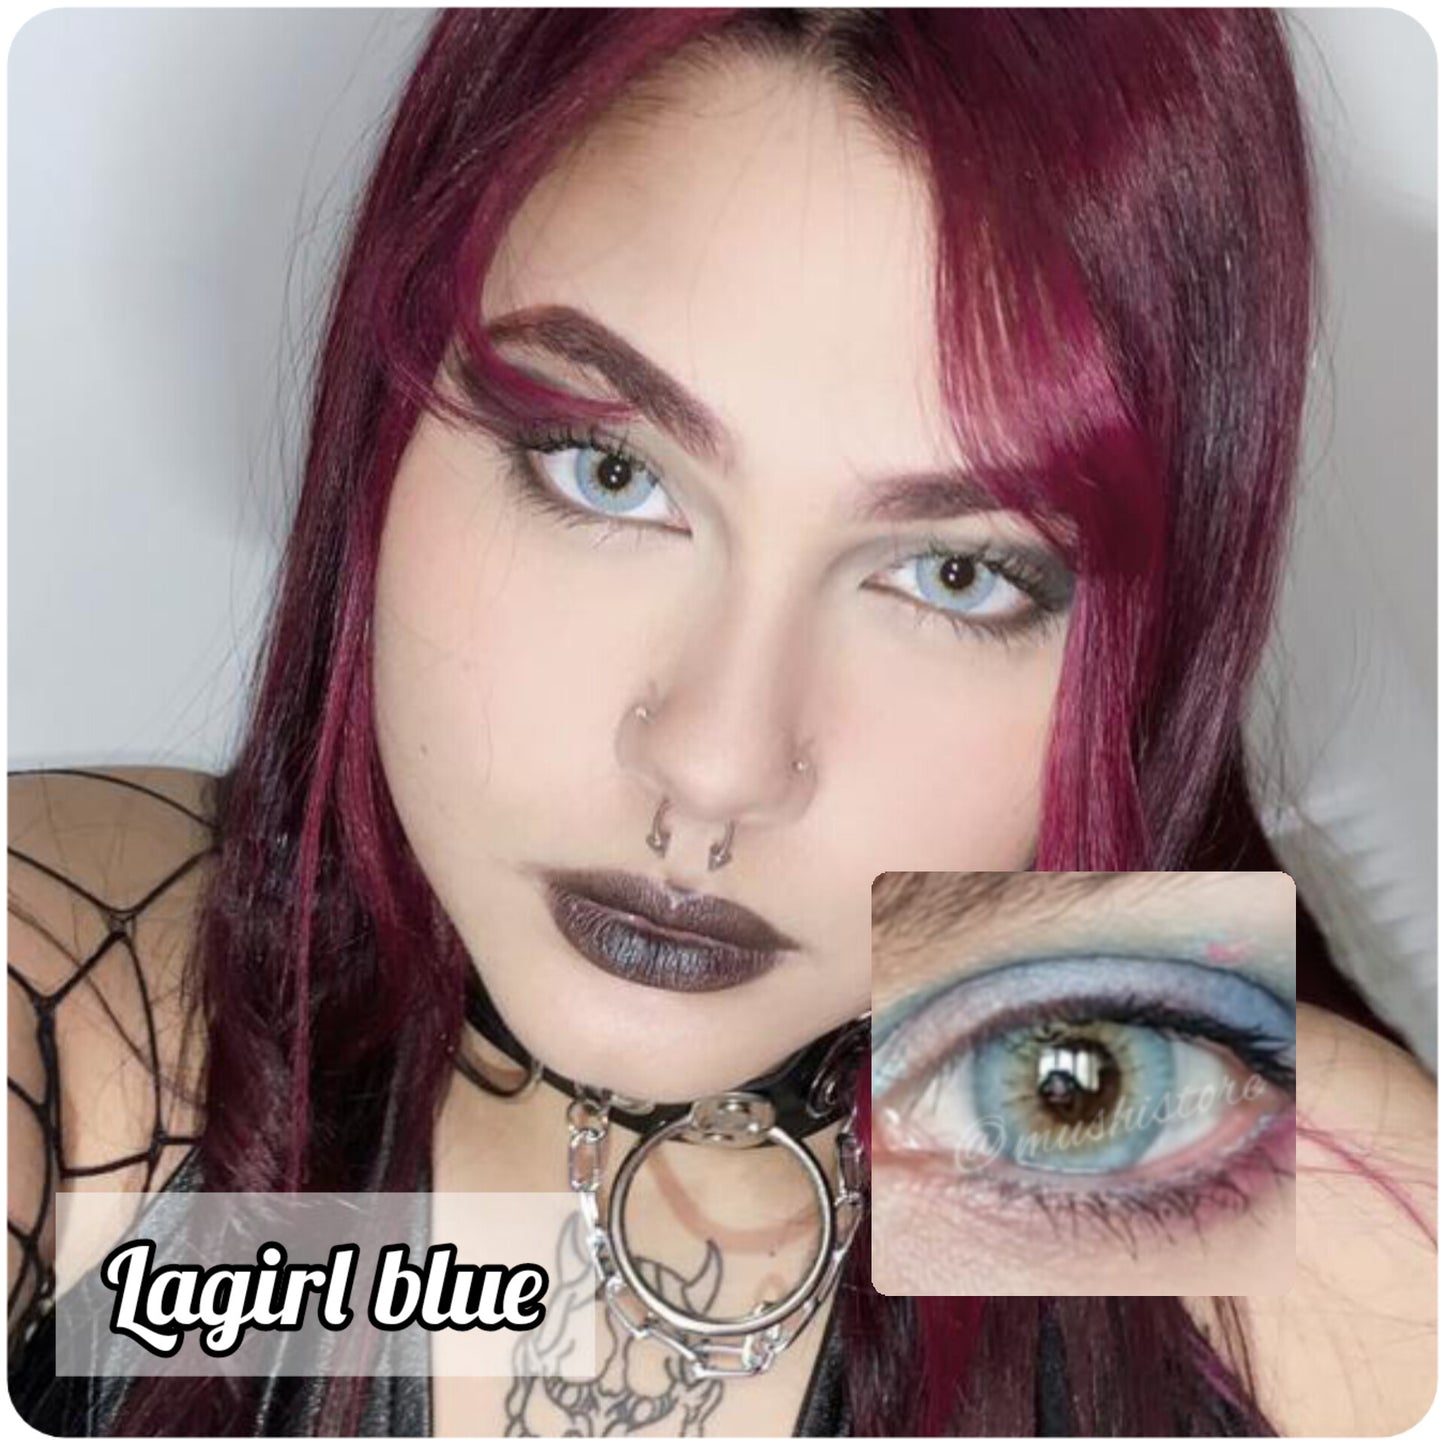 LaGirl Blue